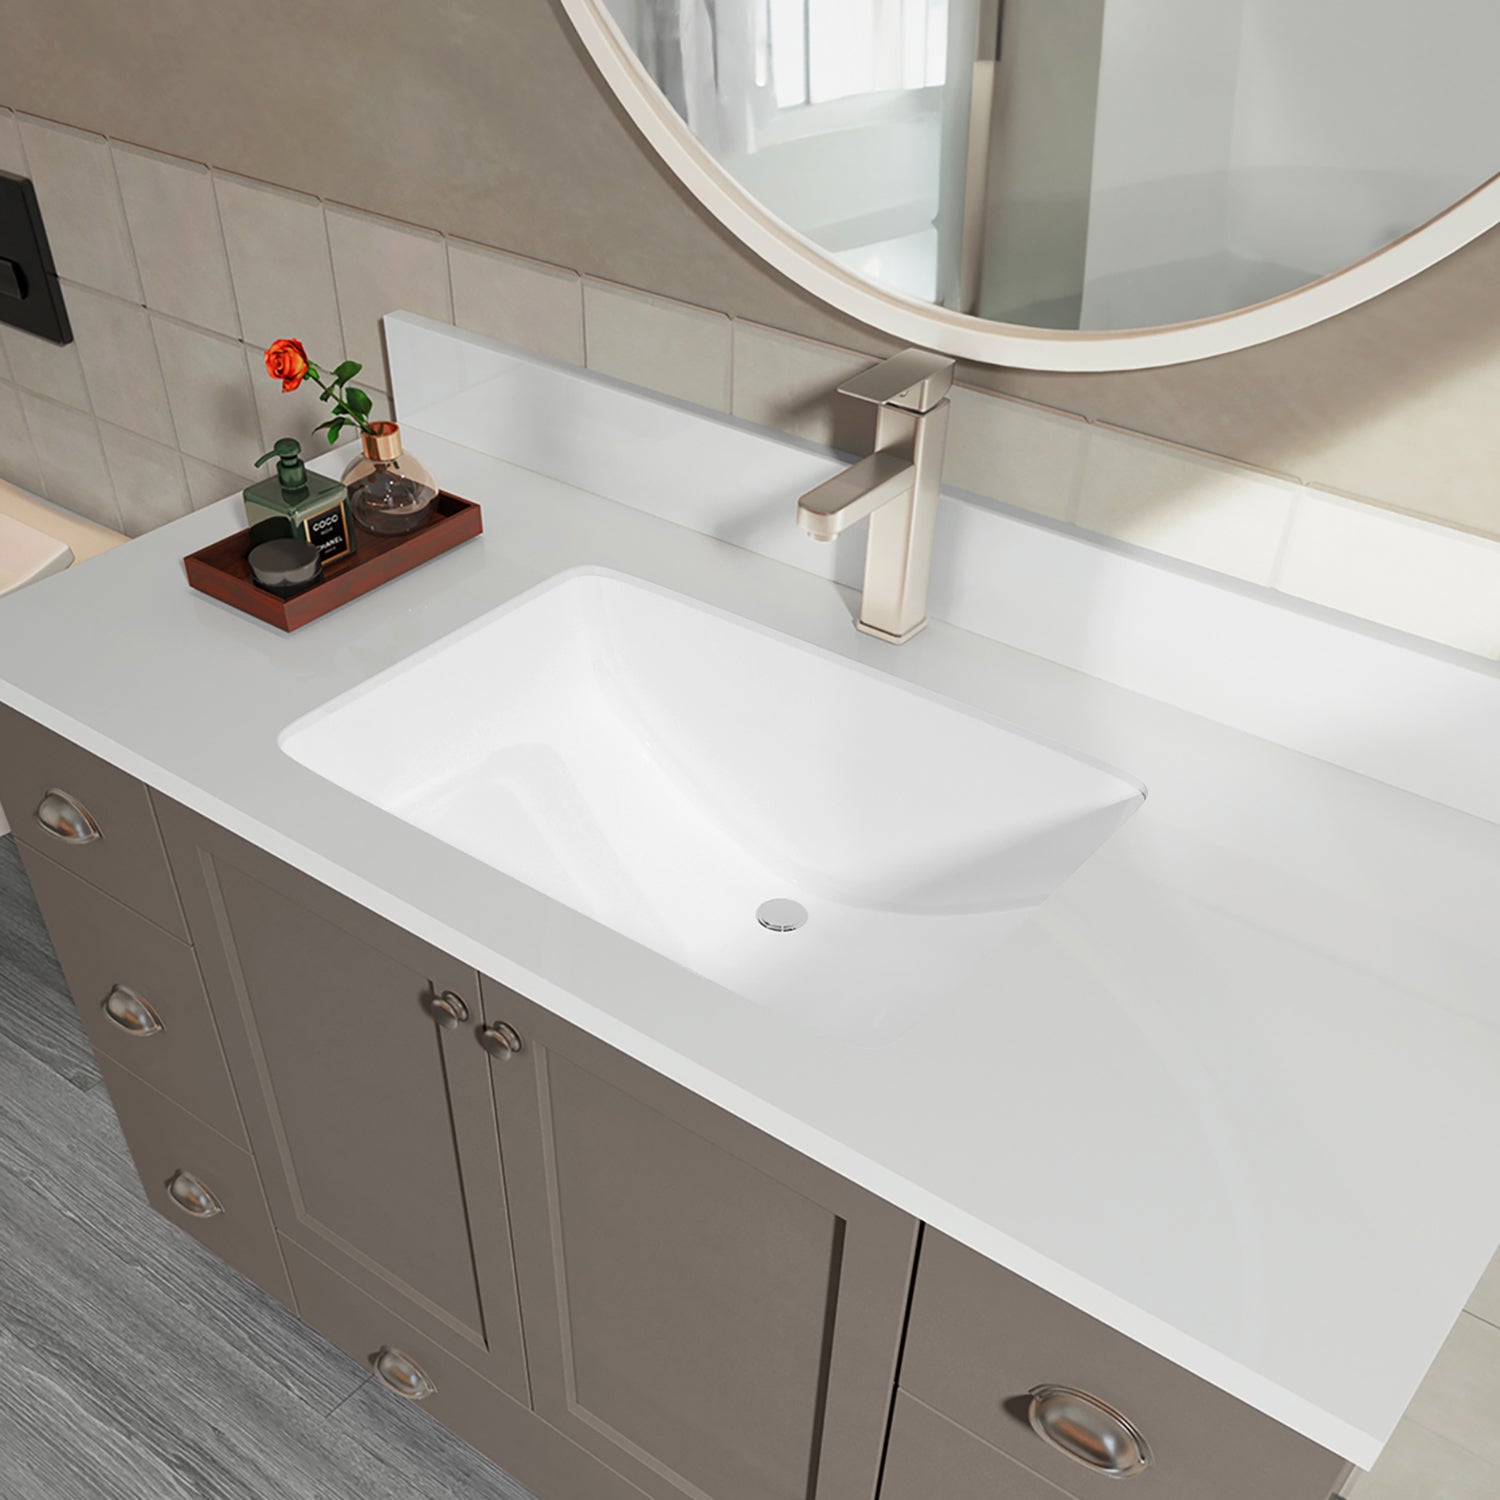 Sinber 21 Inches Undermount Rectangular Bathroom Sink with Overflow Ceramic White Finish C1312-OL